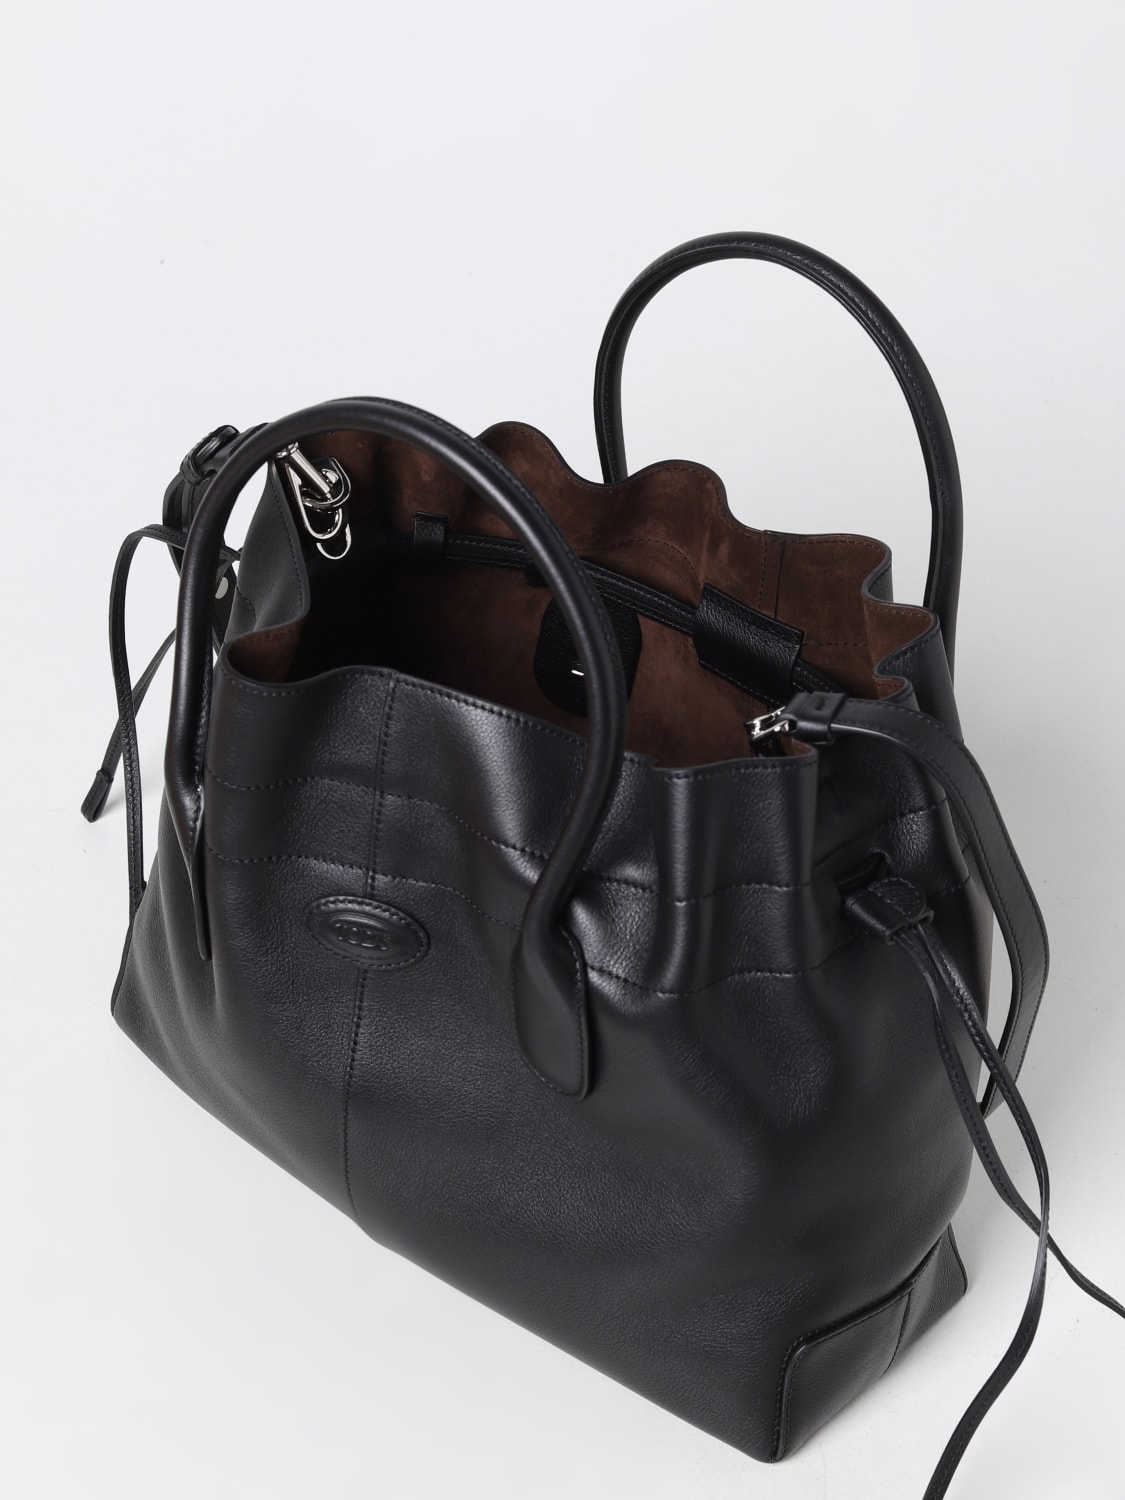 Handbags Tod's Tods Wave Blue Black Snakeskin Large Satchel Top Handle Crossbody Bag